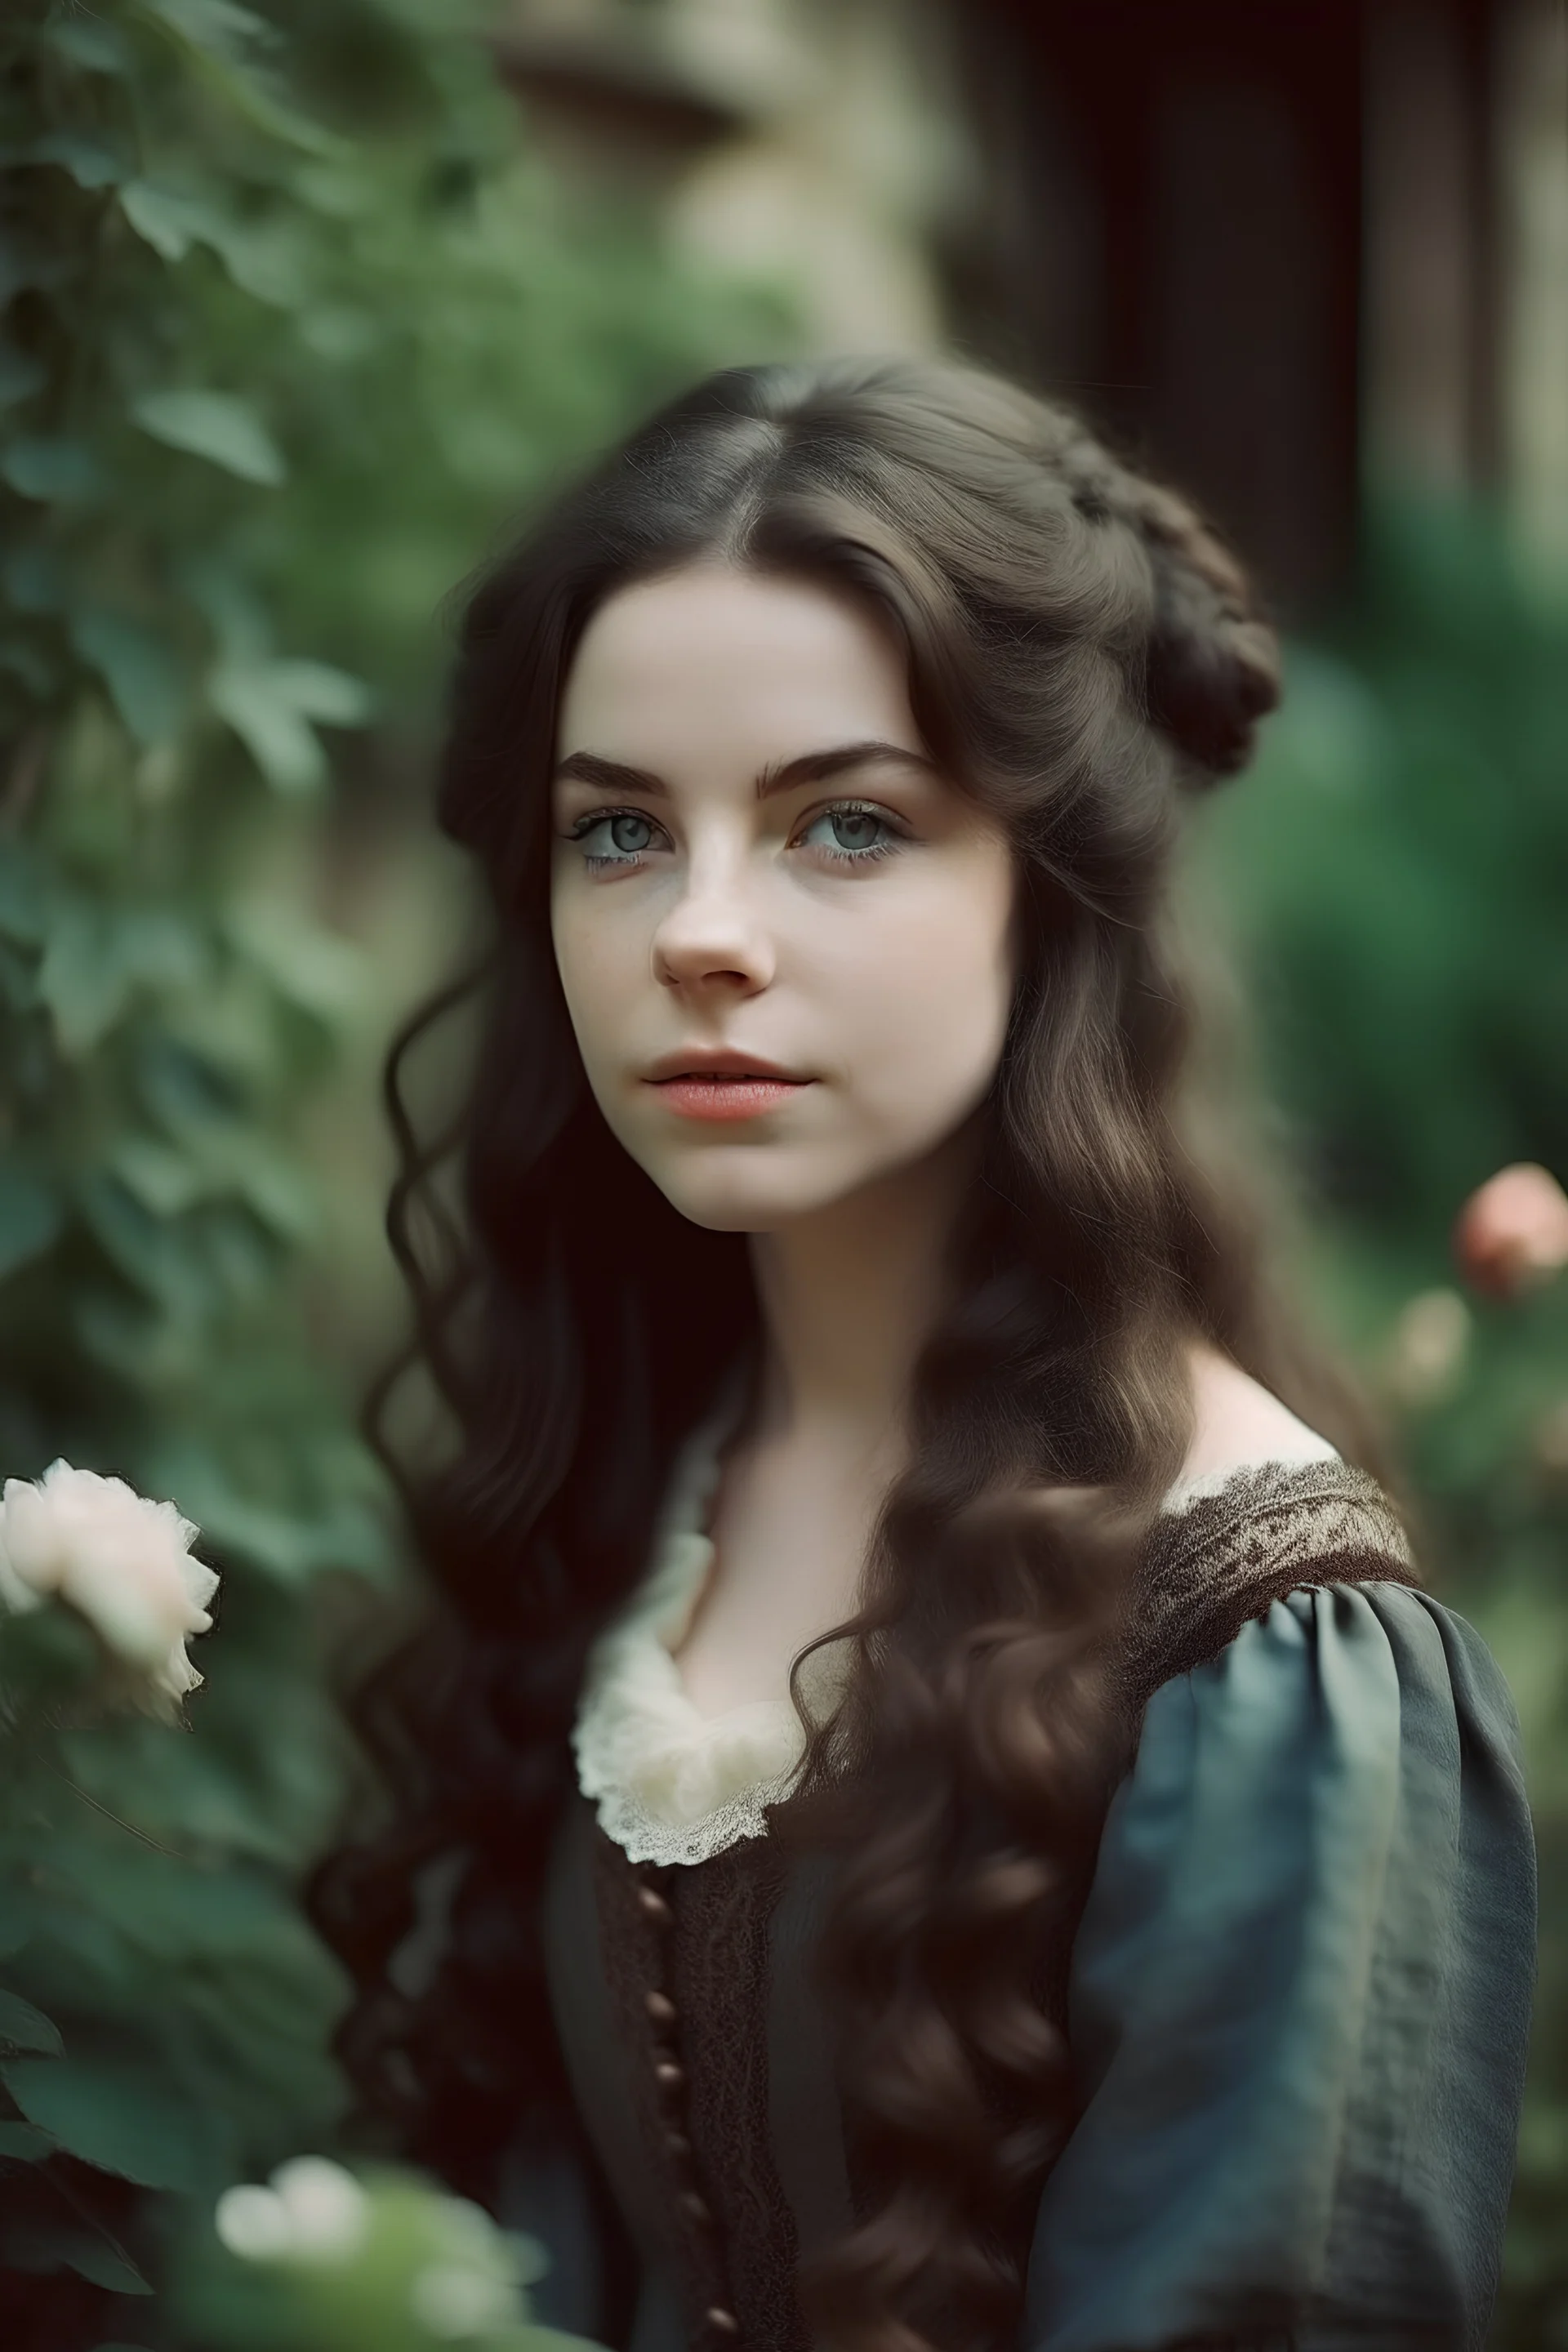 Beautiful Girl in the garden, 18 century, brunette, literally dark hair